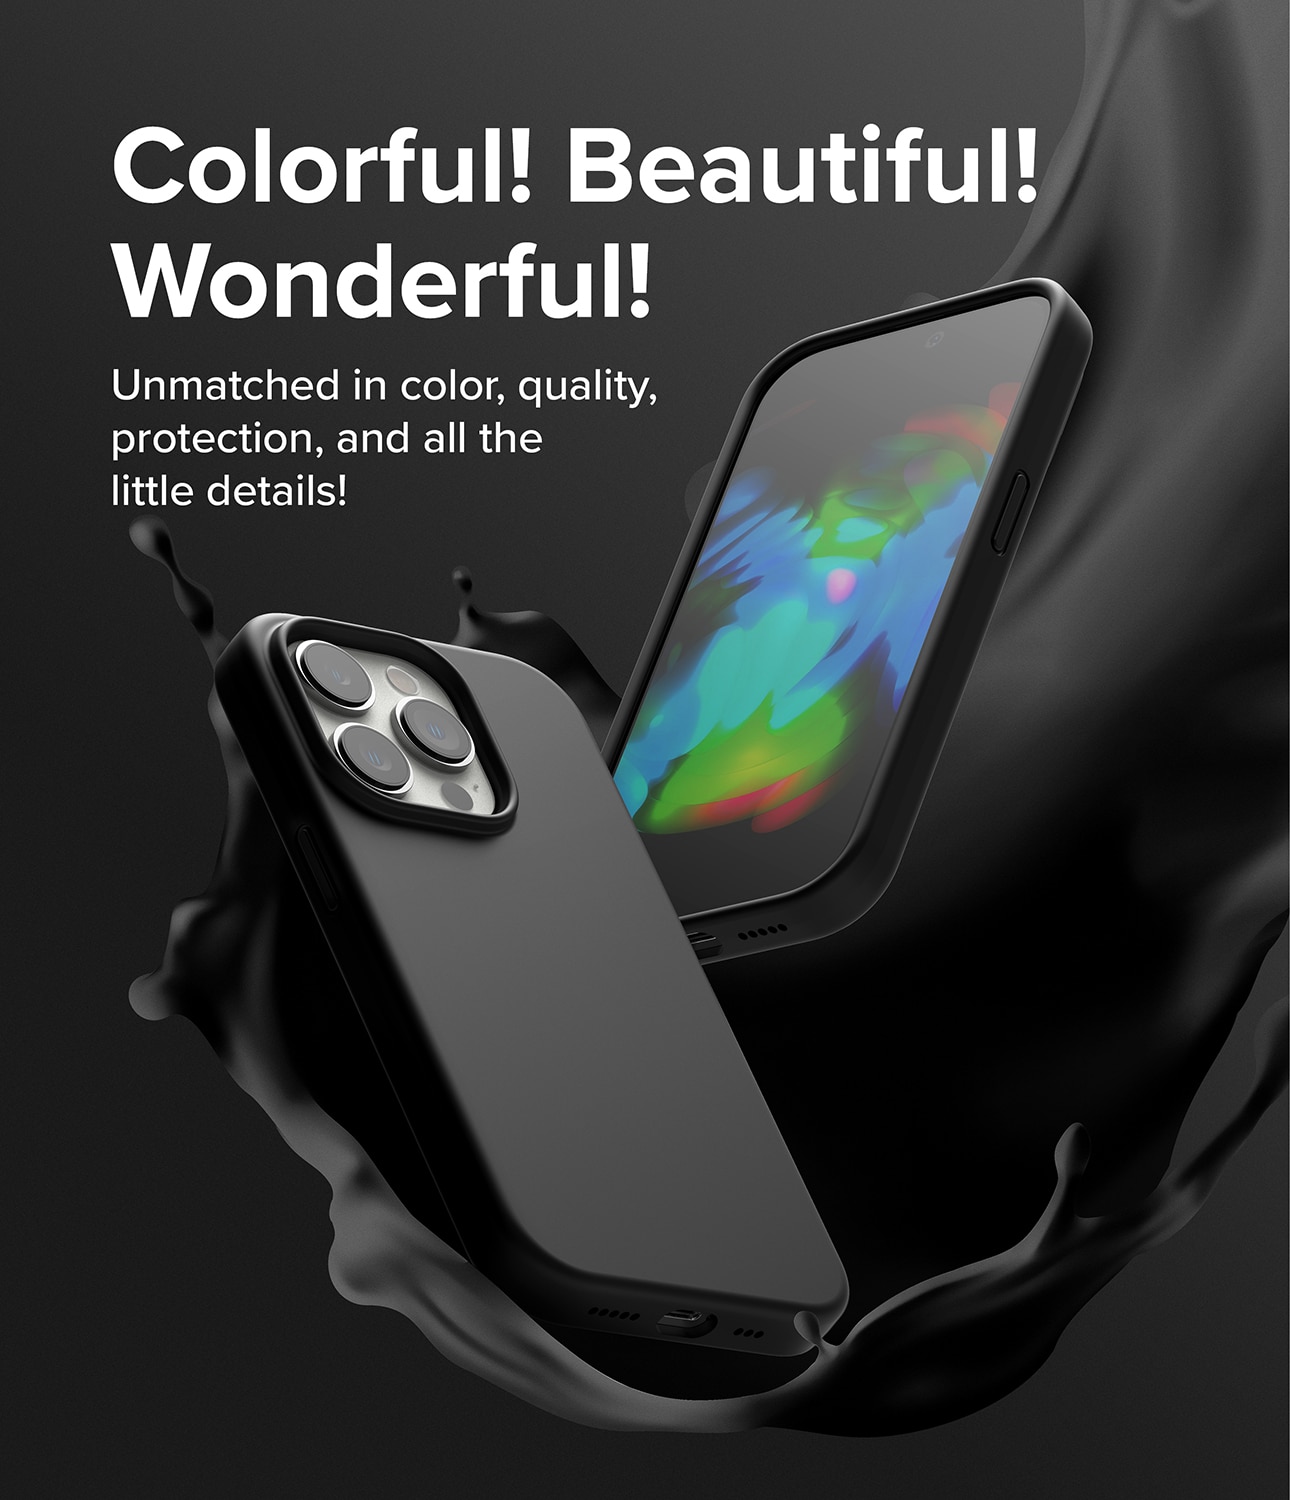 iPhone 14 Pro Silicone Case Black